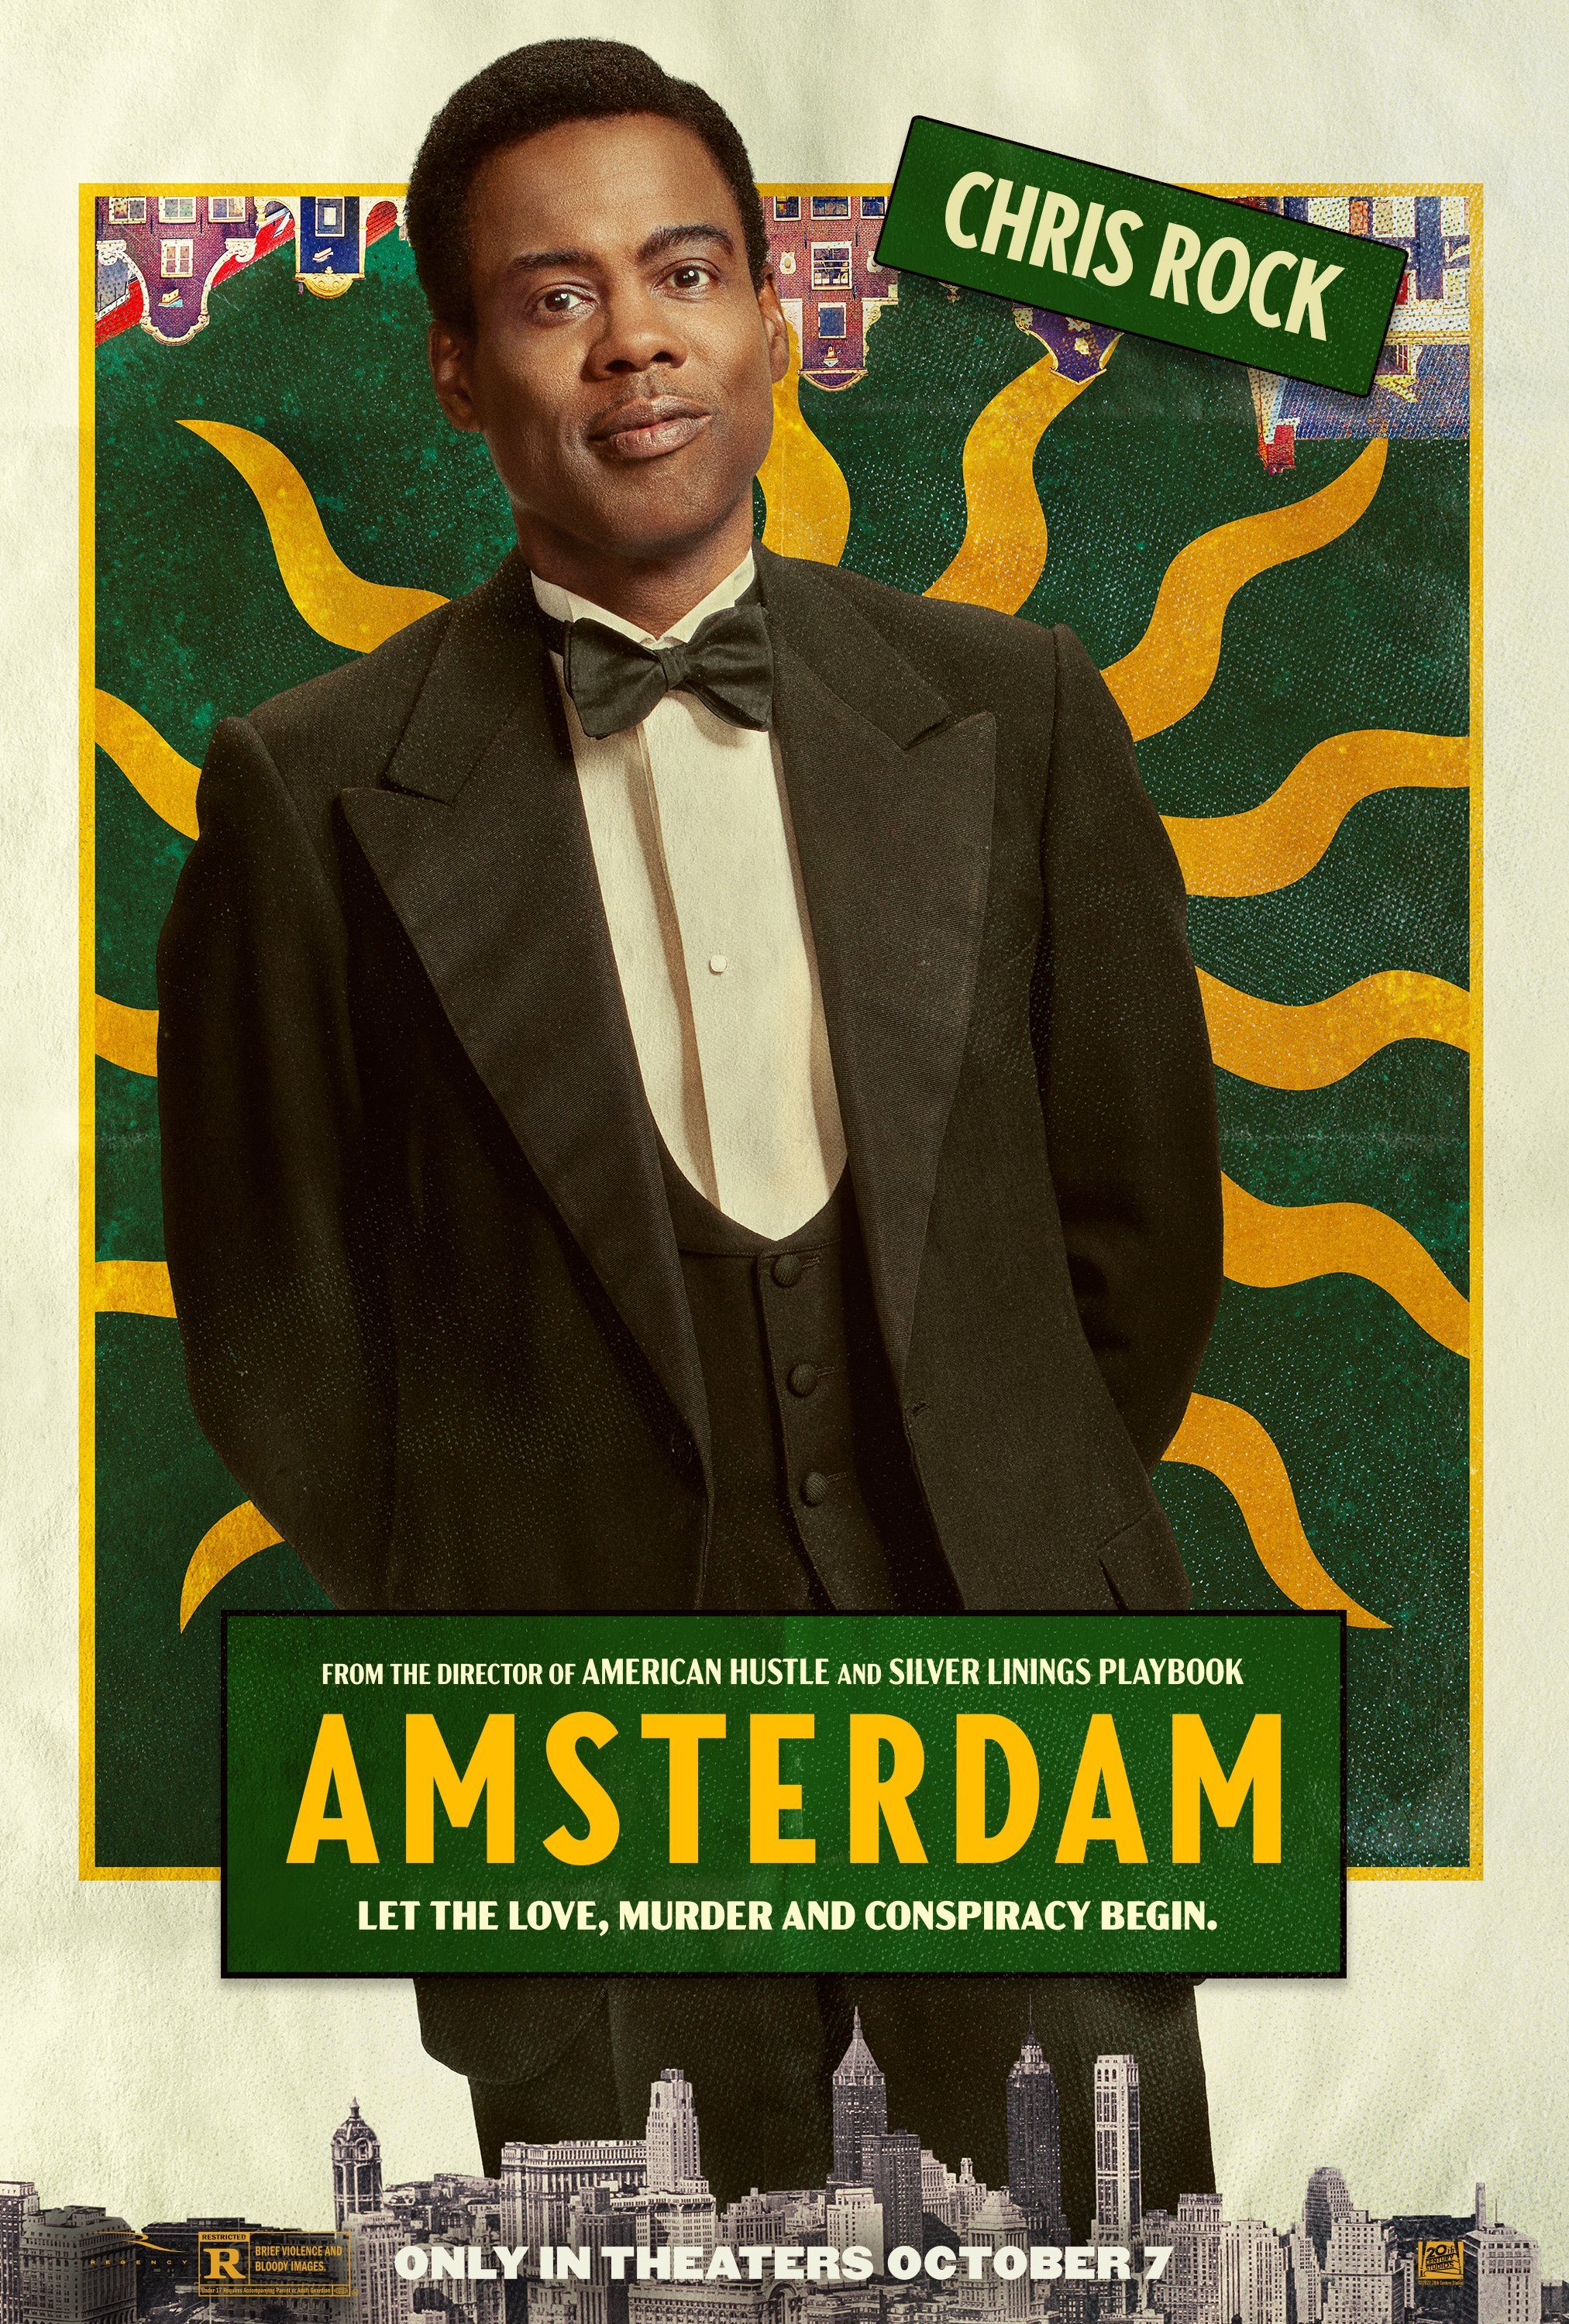 Chris Rock in Amsterdam poster